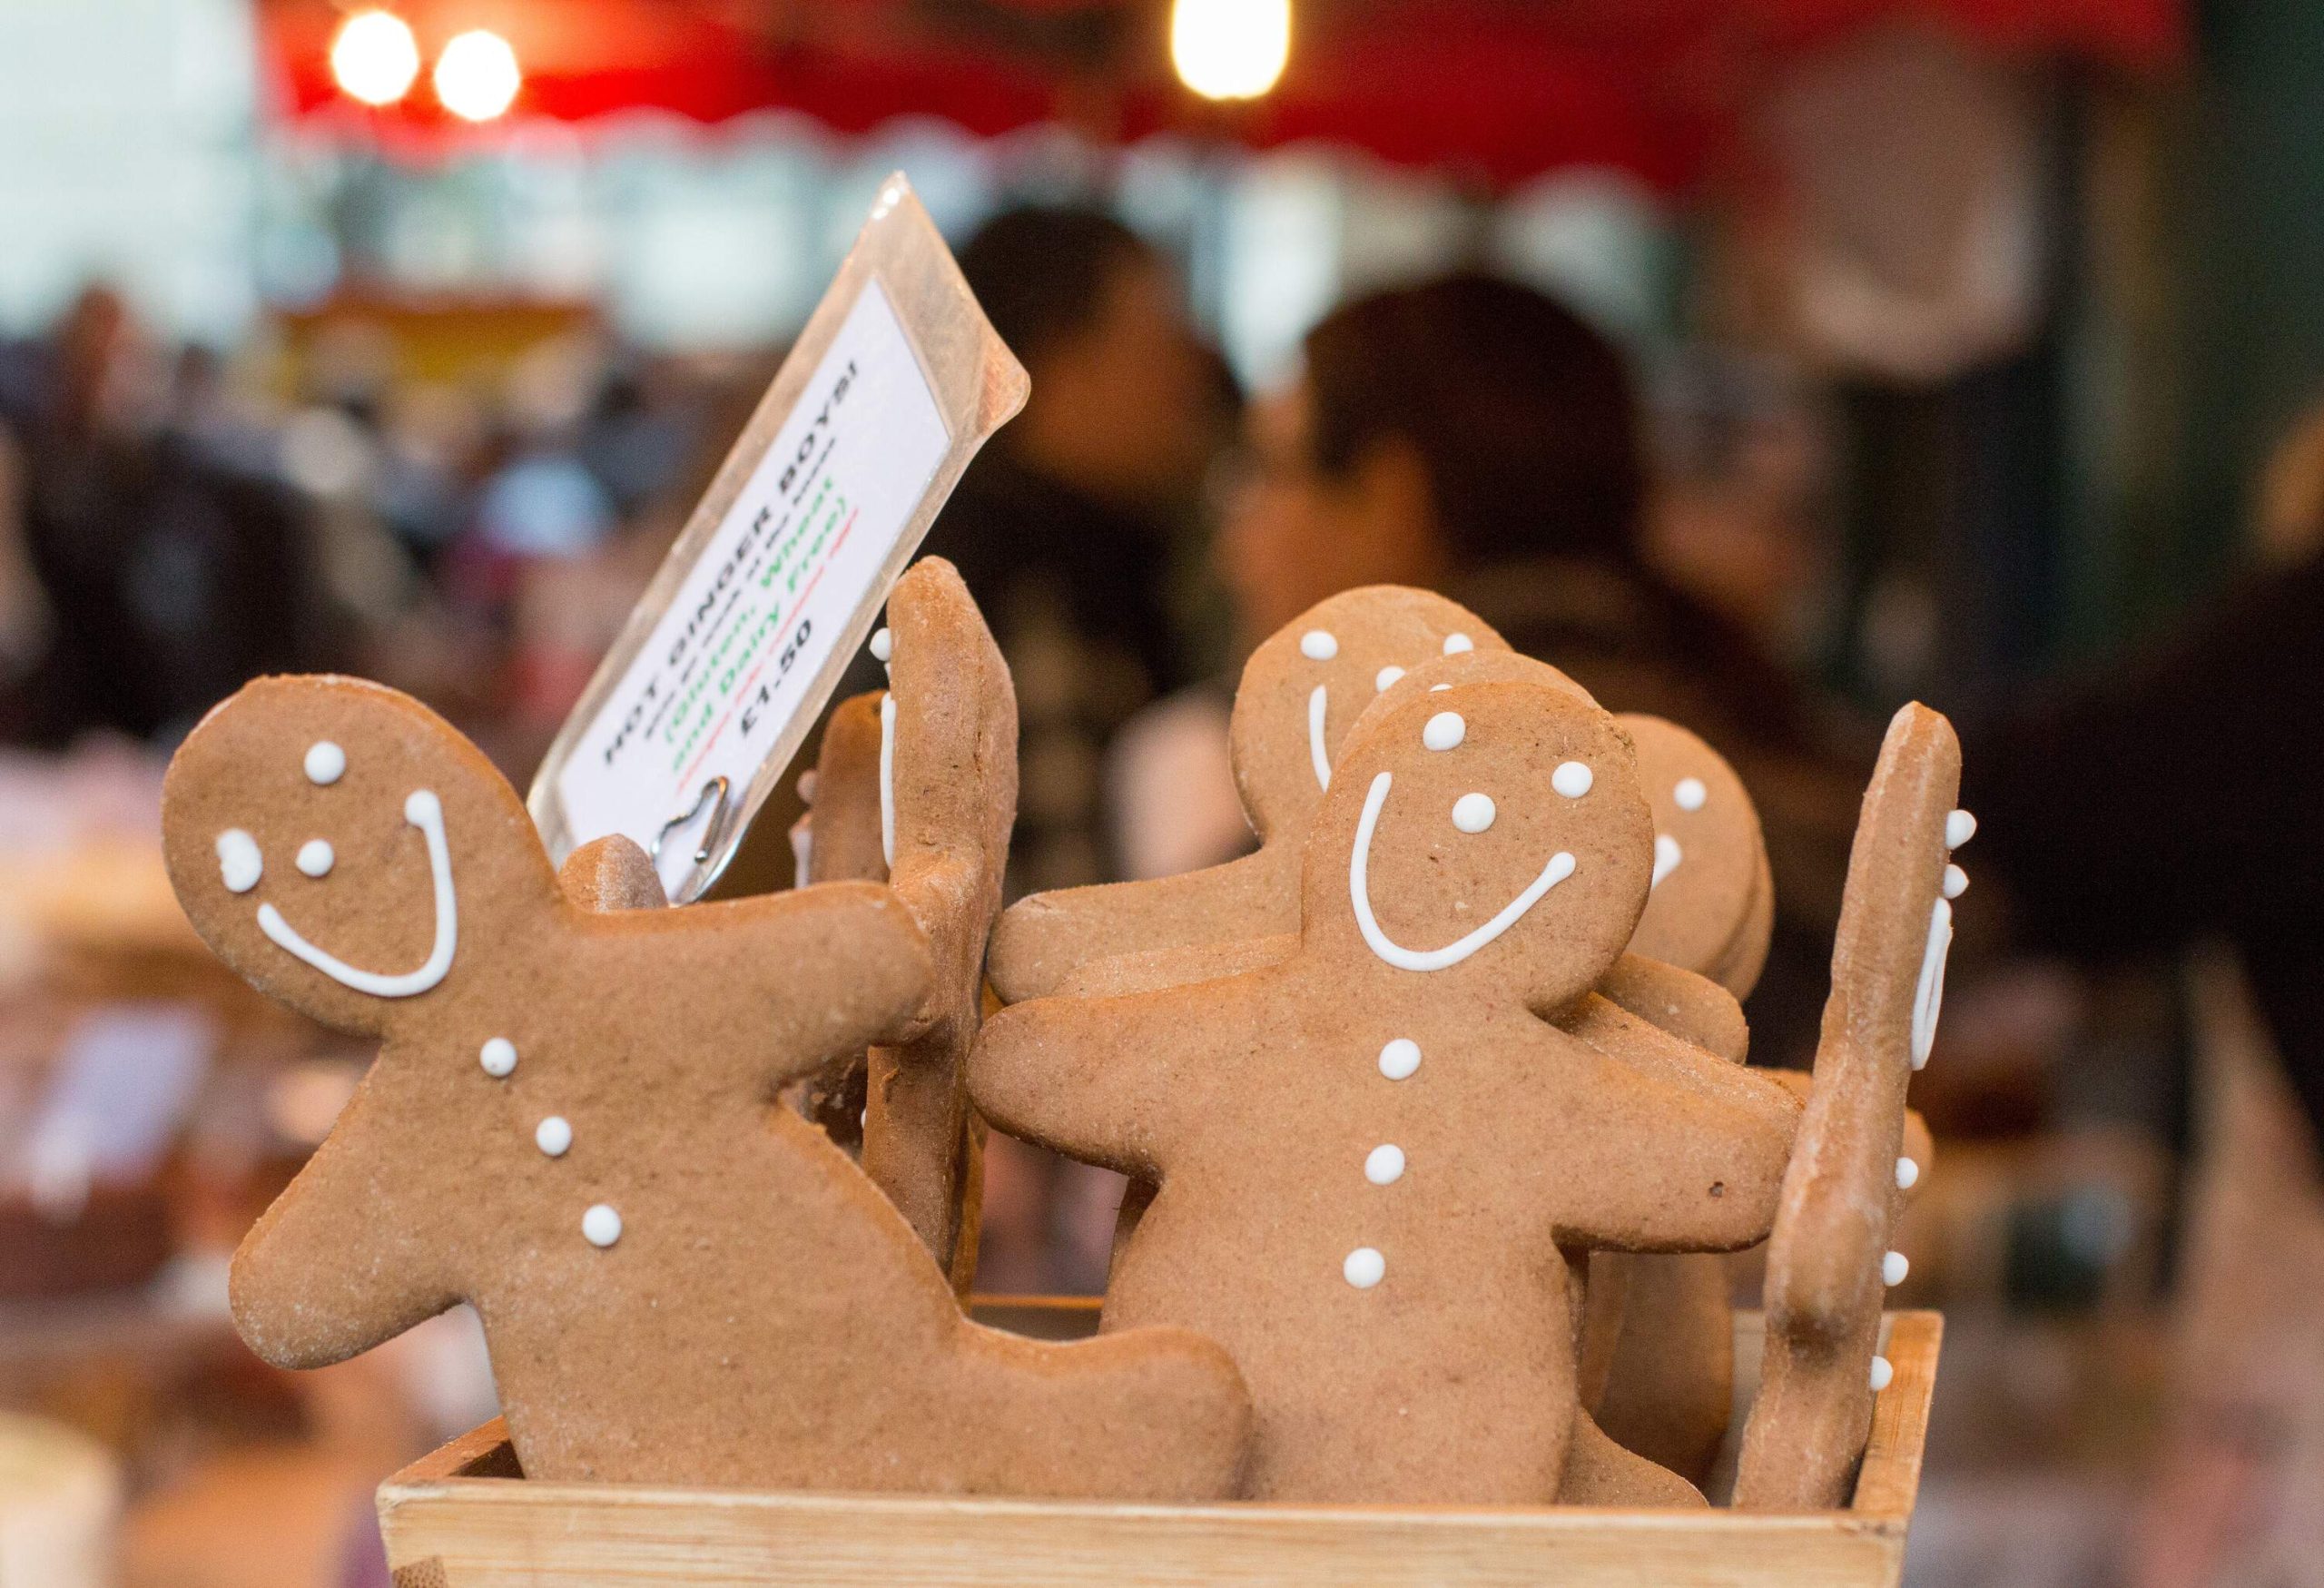 Gingerbread Men for sale in Borough Market, London.